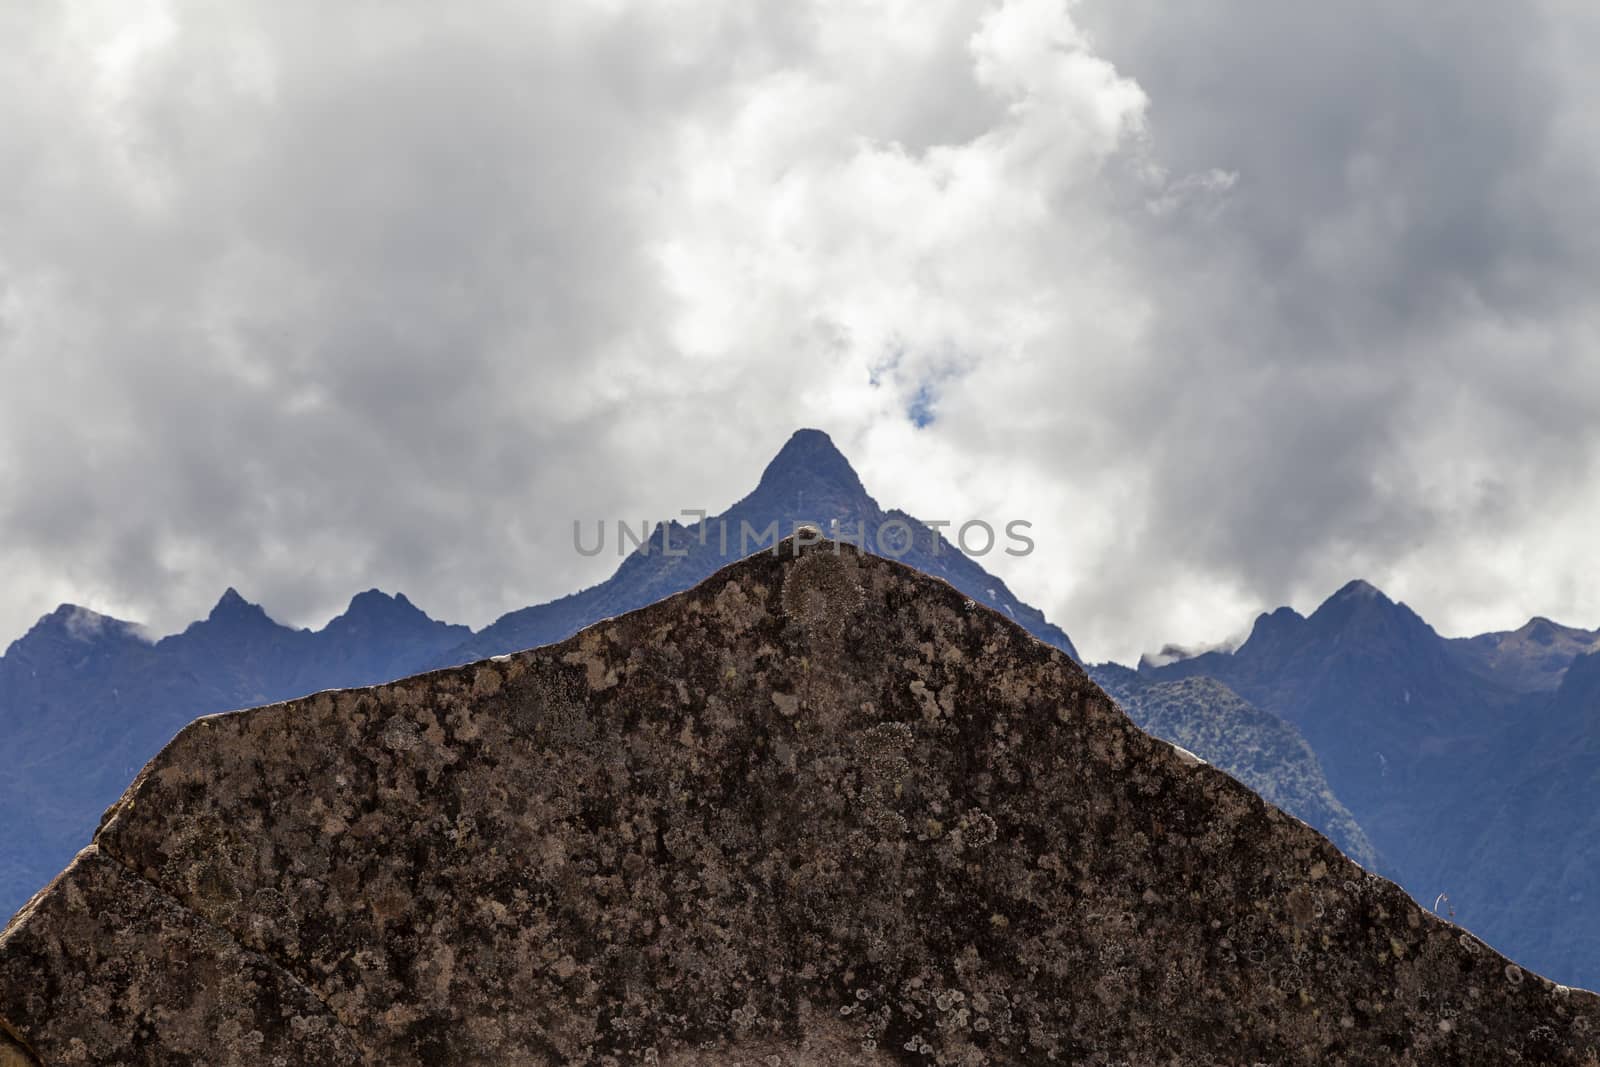 Sacred rock and monolith of Machu Picchu, Peru by alvarobueno